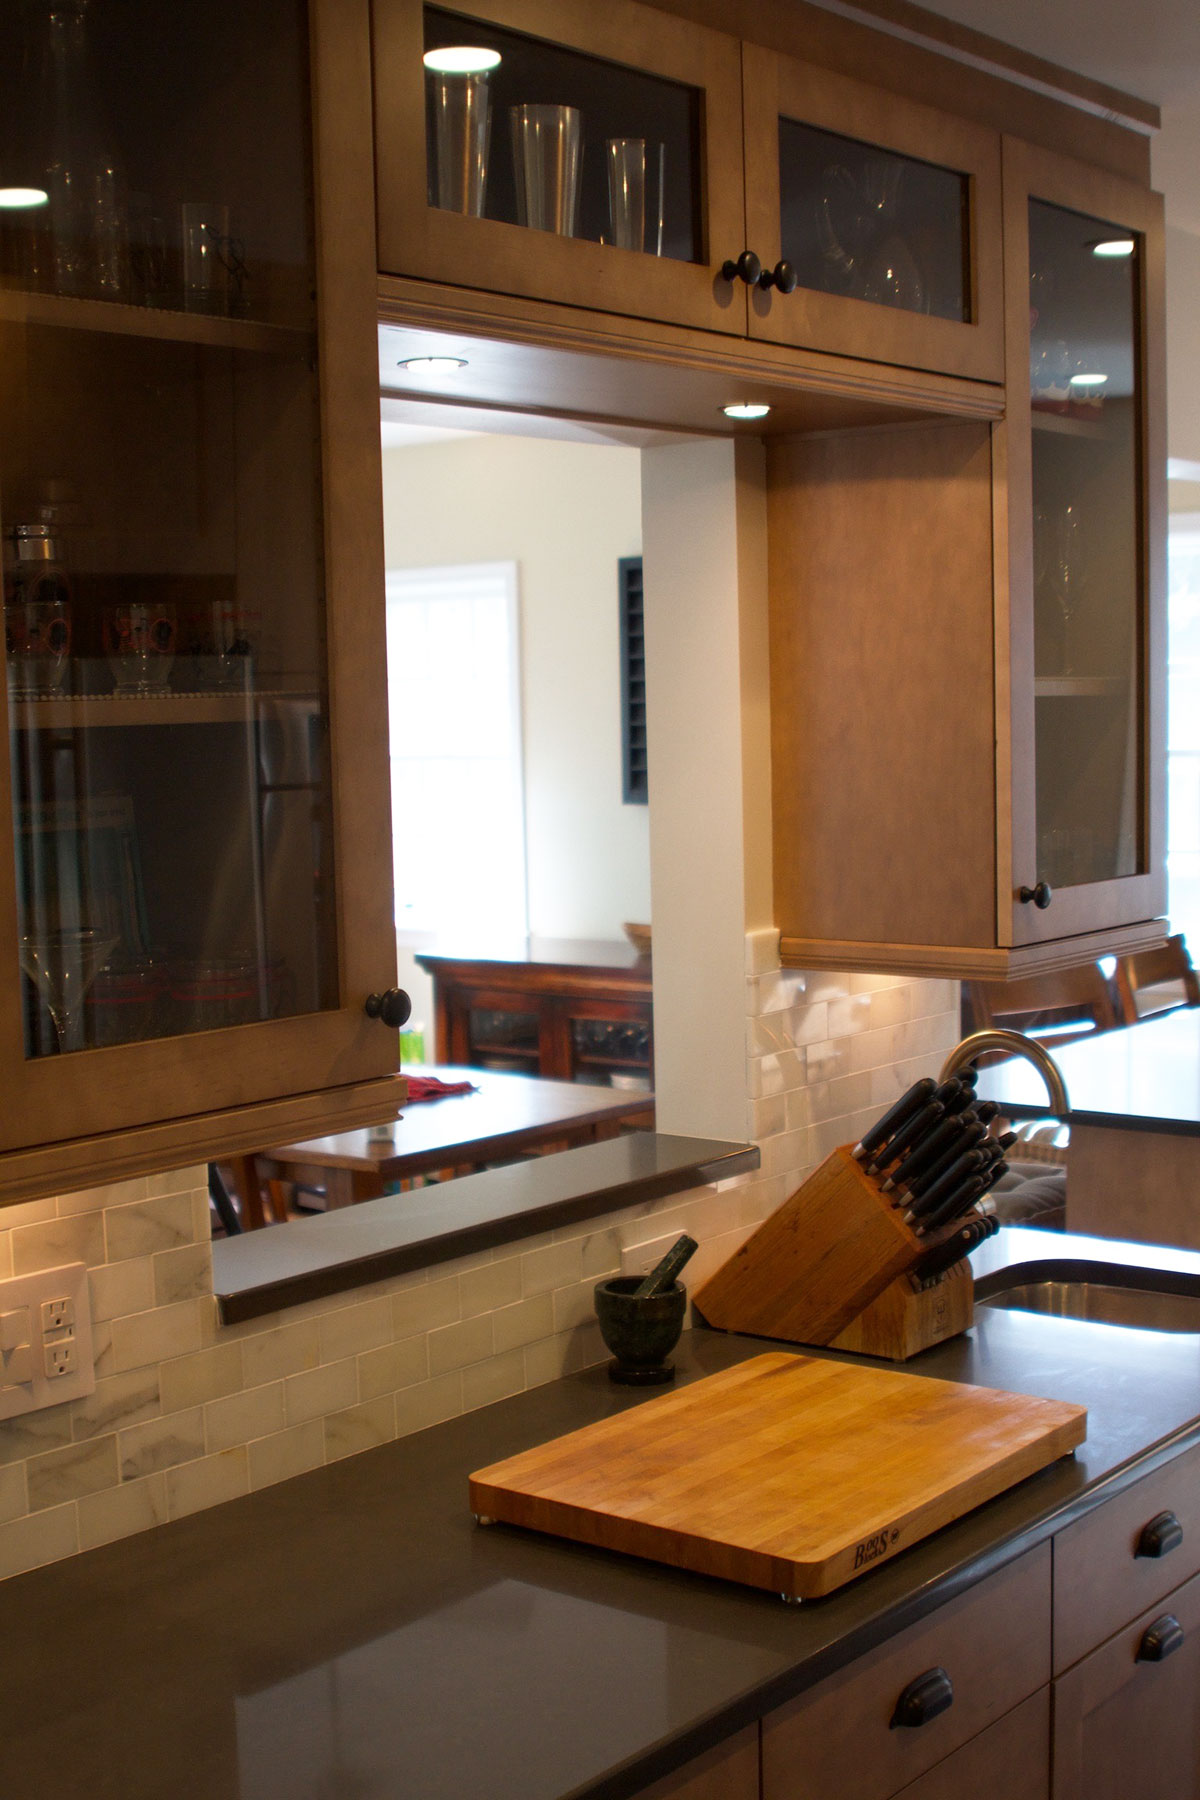 Kitchen with pass through window